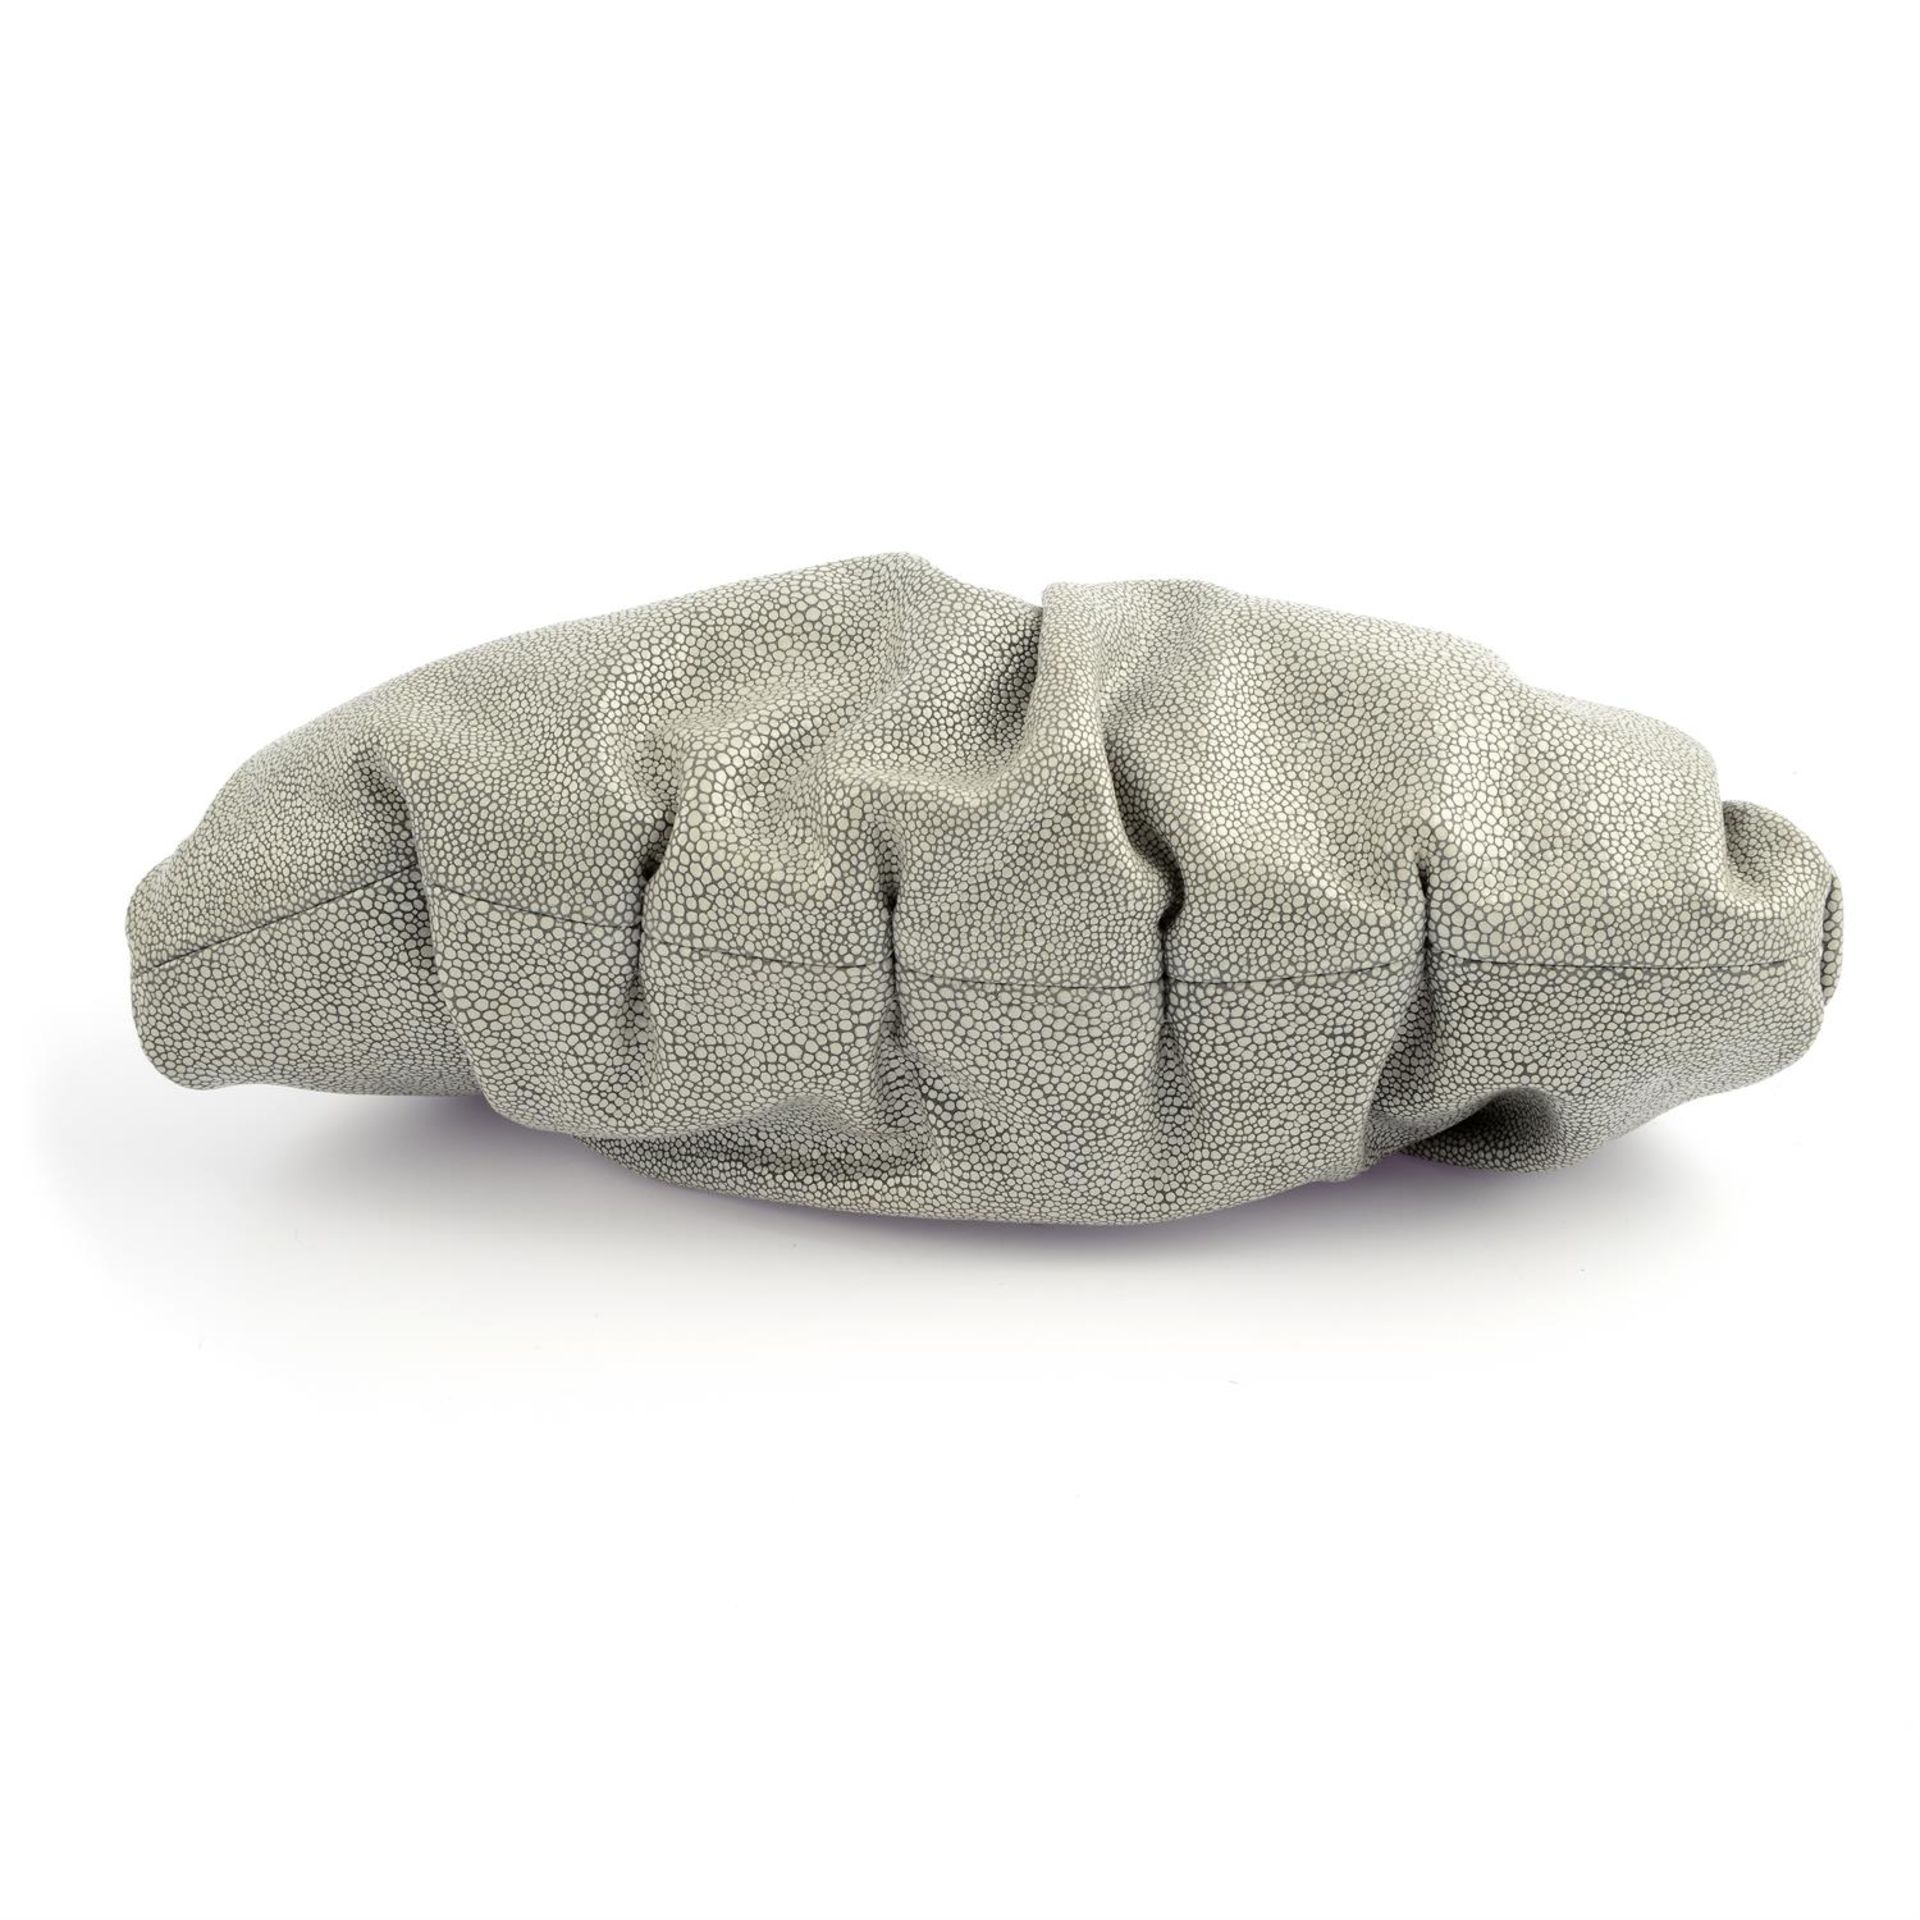 ARMANI - a grey imitation shagreen leather clutch. - Image 4 of 4